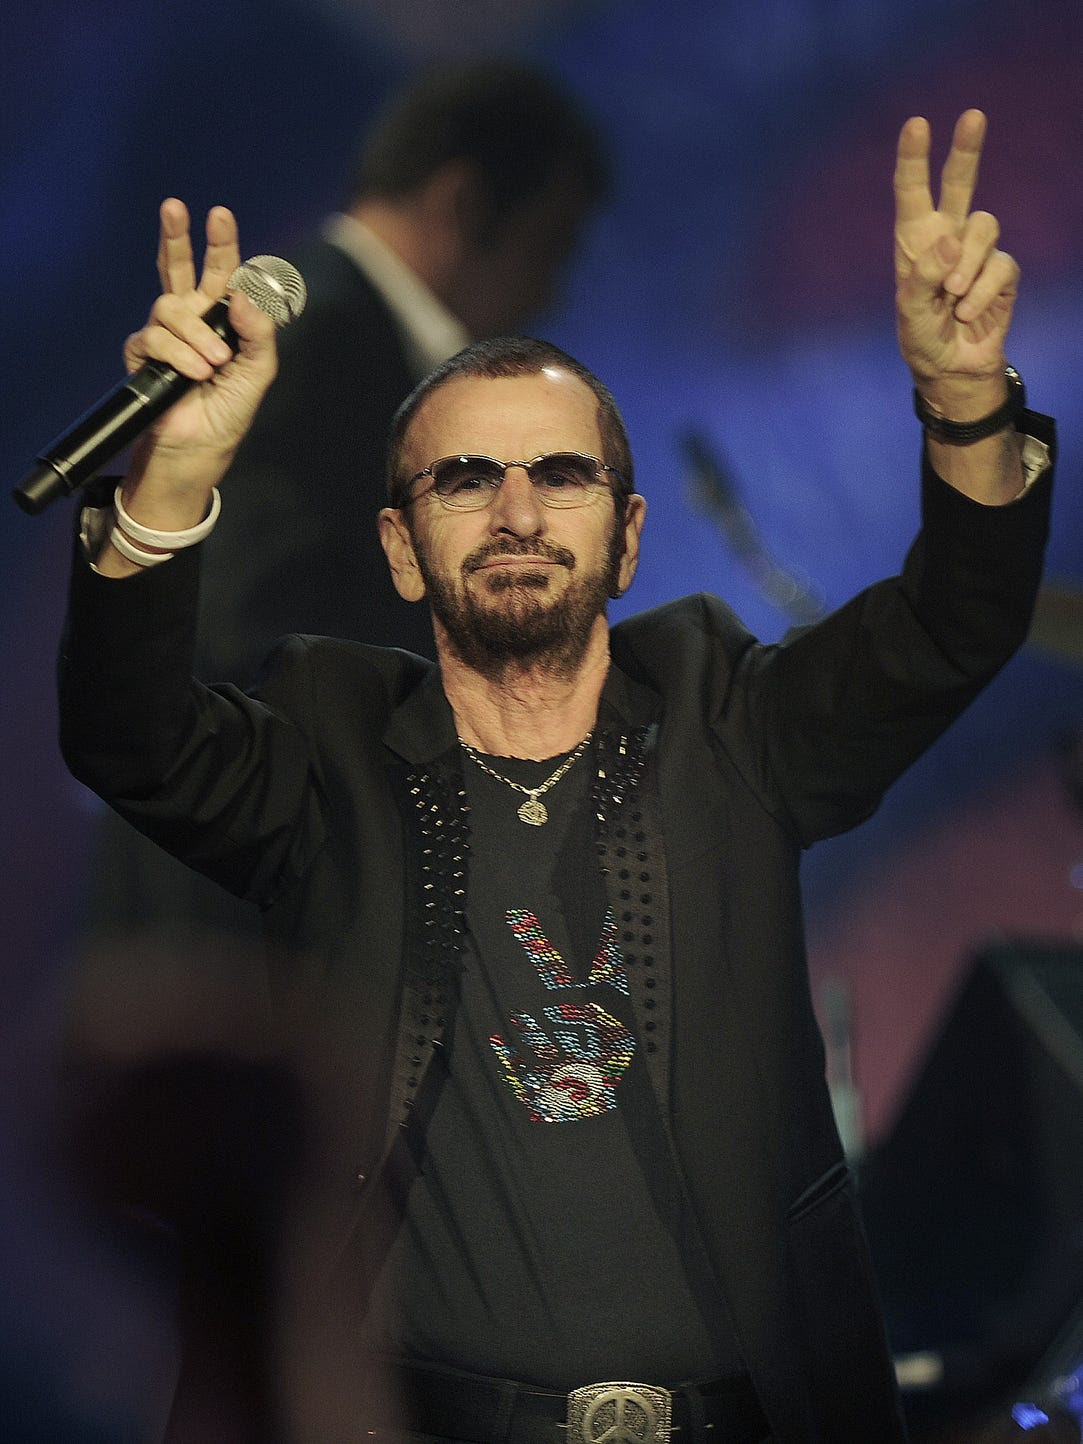 PAUL ON THE RUN: Ringo Starr at the Ryman: 'My heart is full'